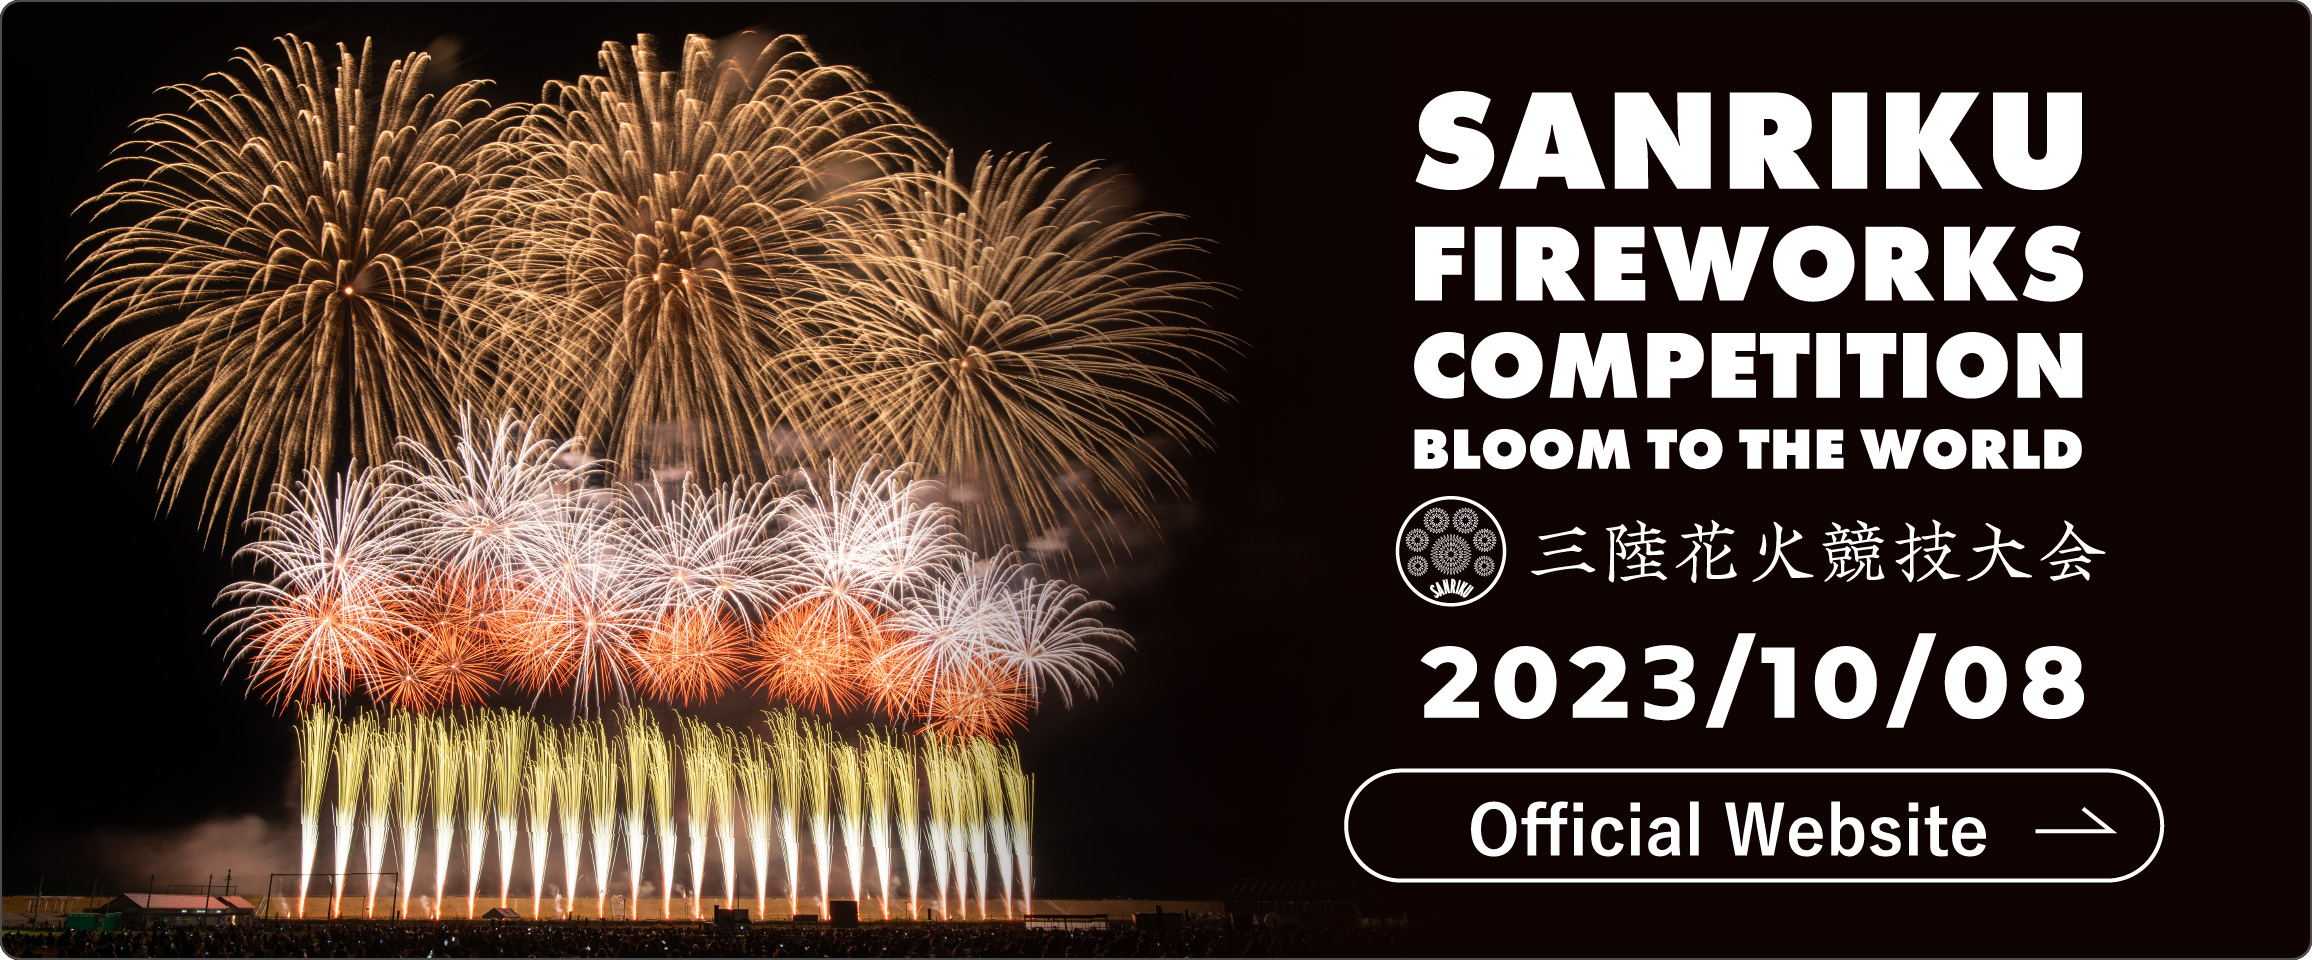 The Sanriku Fireworks Competition